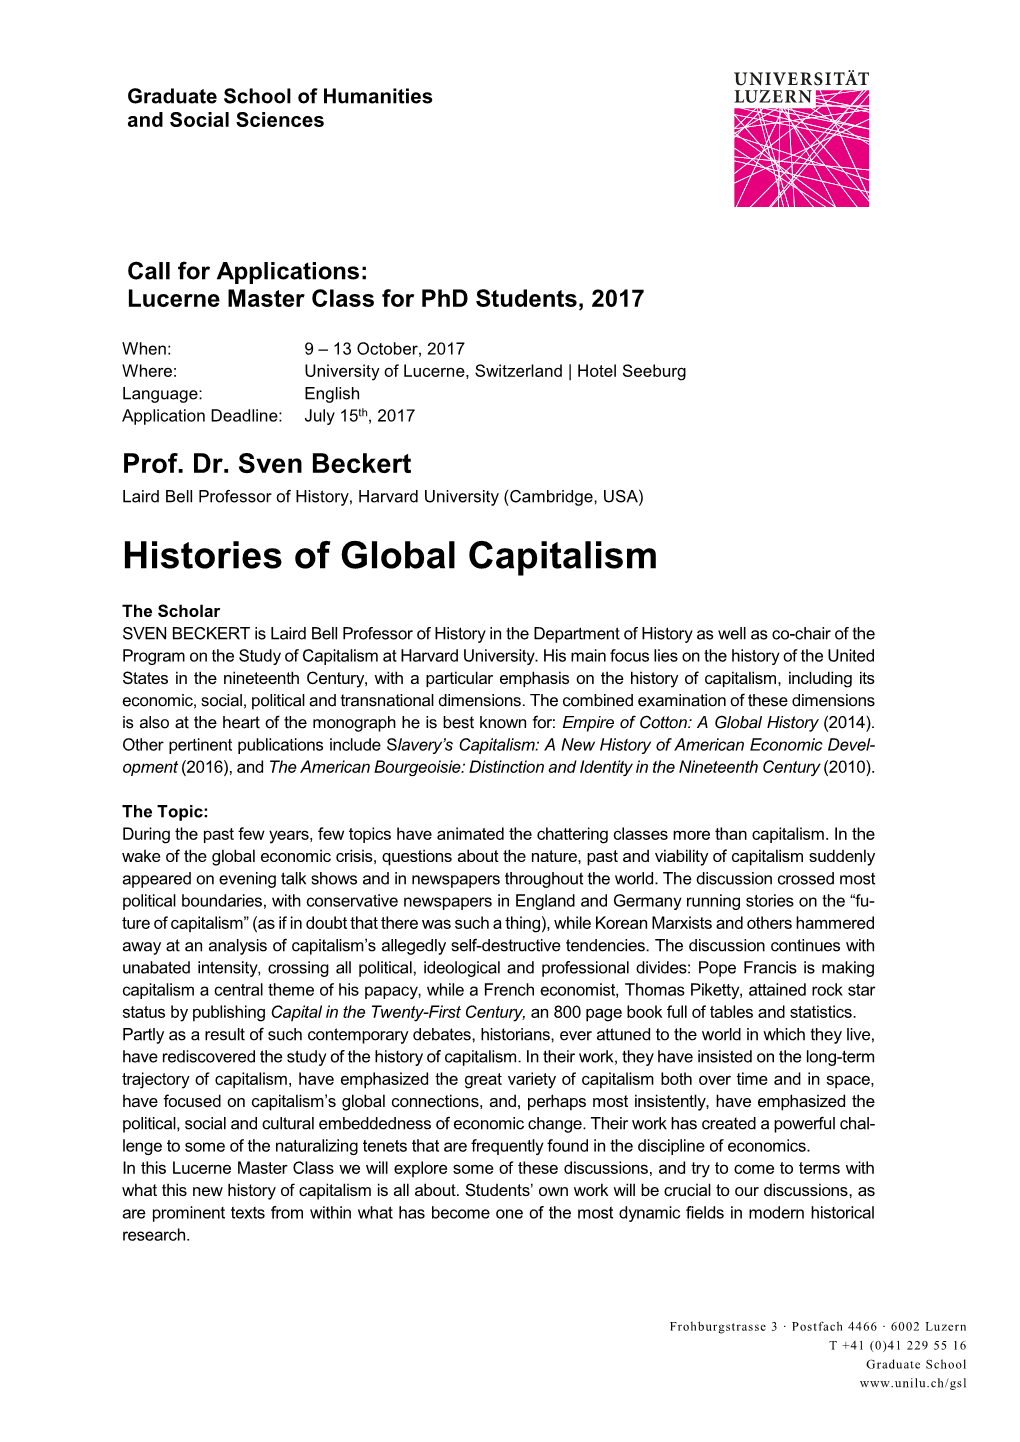 Histories of Global Capitalism